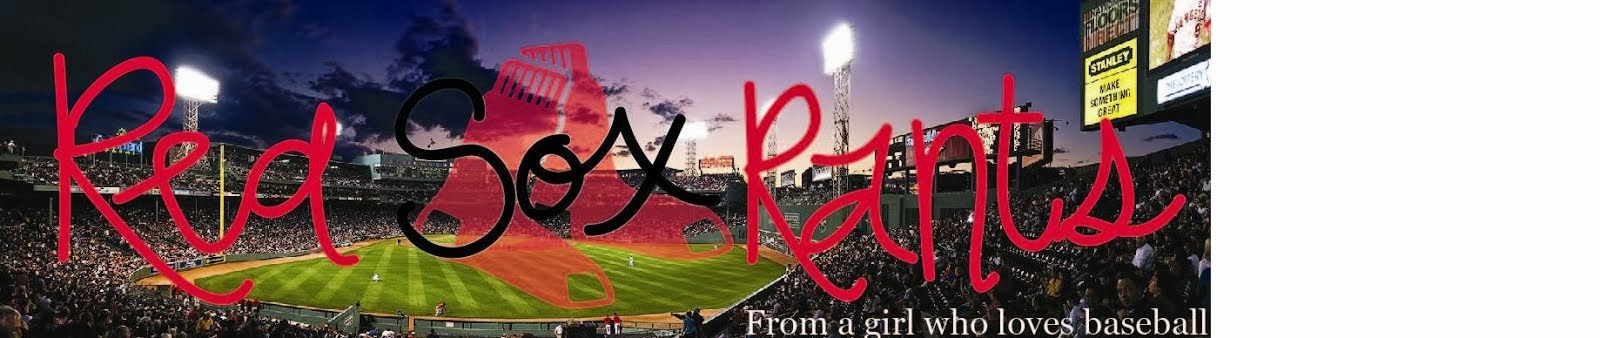 Red Sox Rants